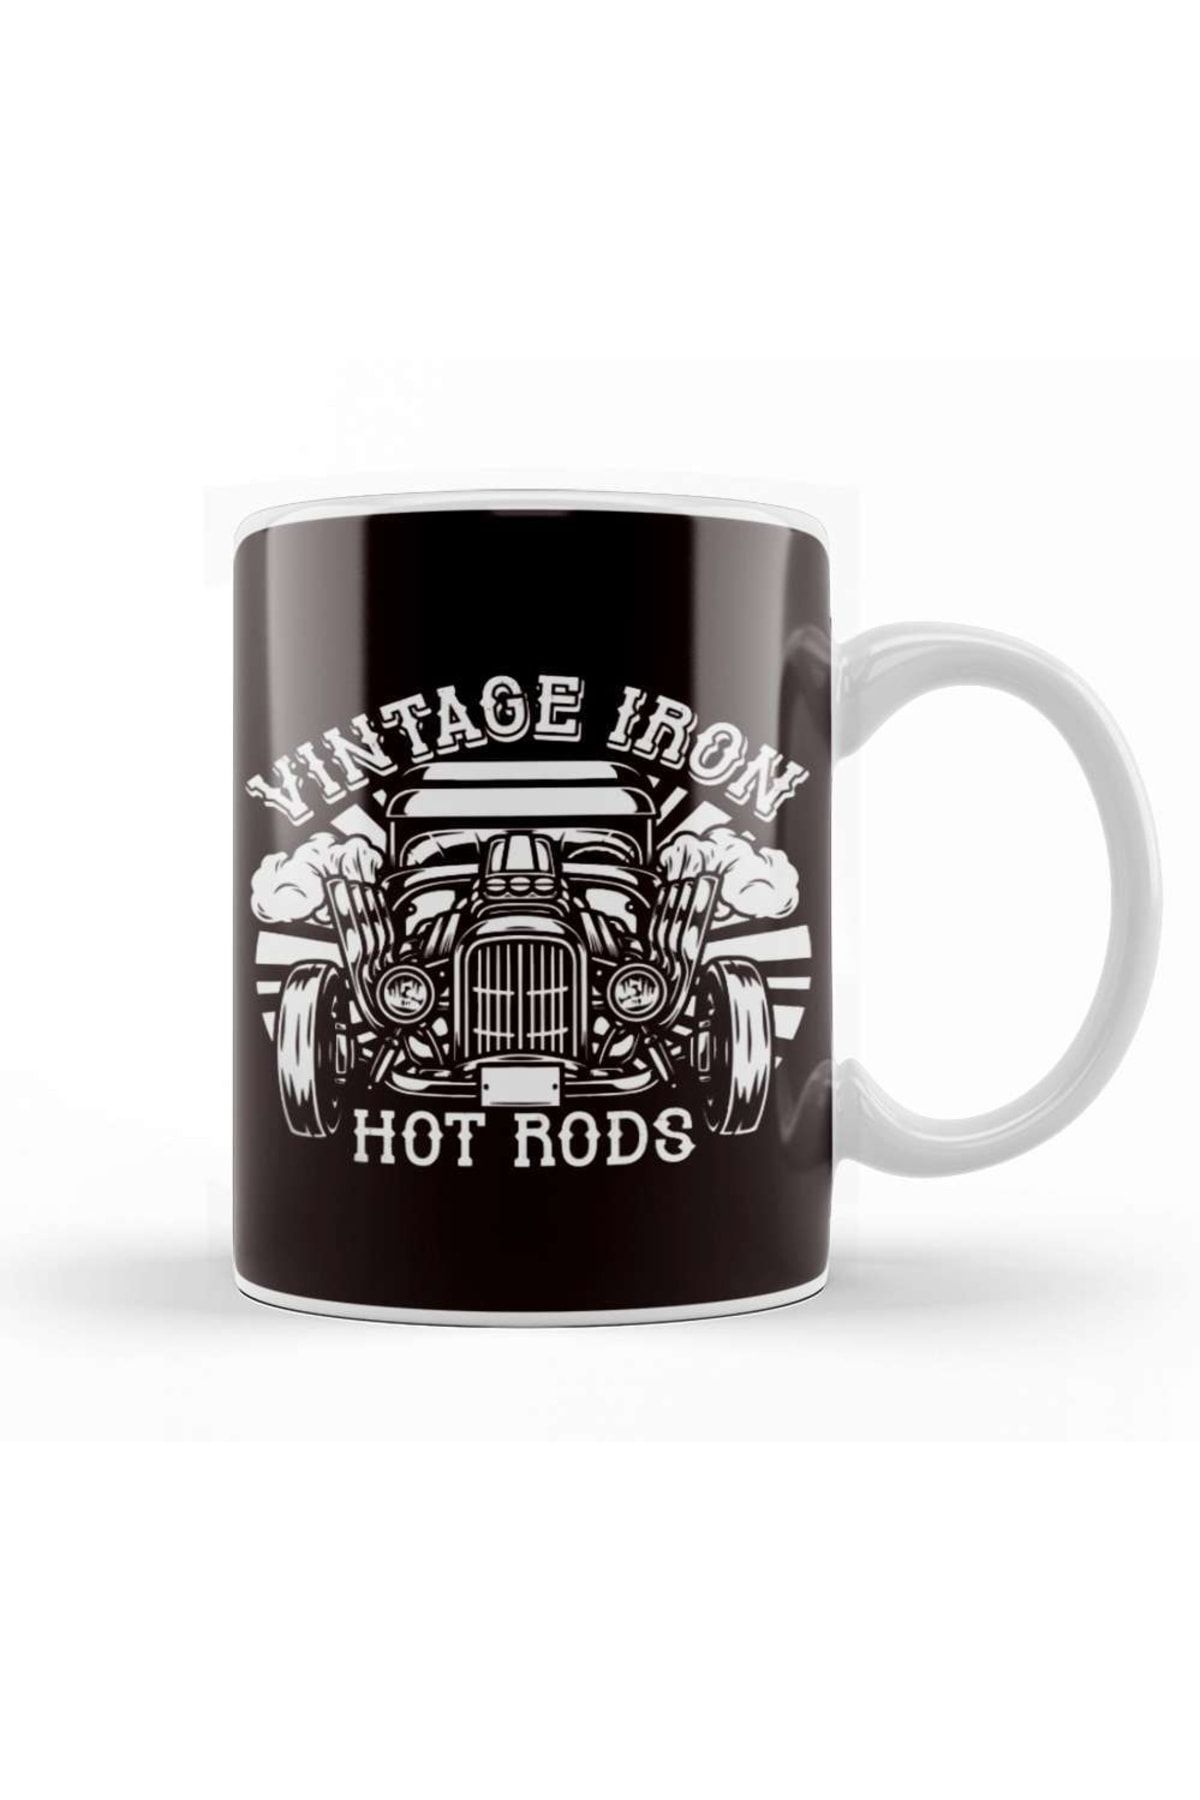 Humuts Vintage Iron Hot Rods American Classic Old Car Automobile Kupa Bardak Porselen